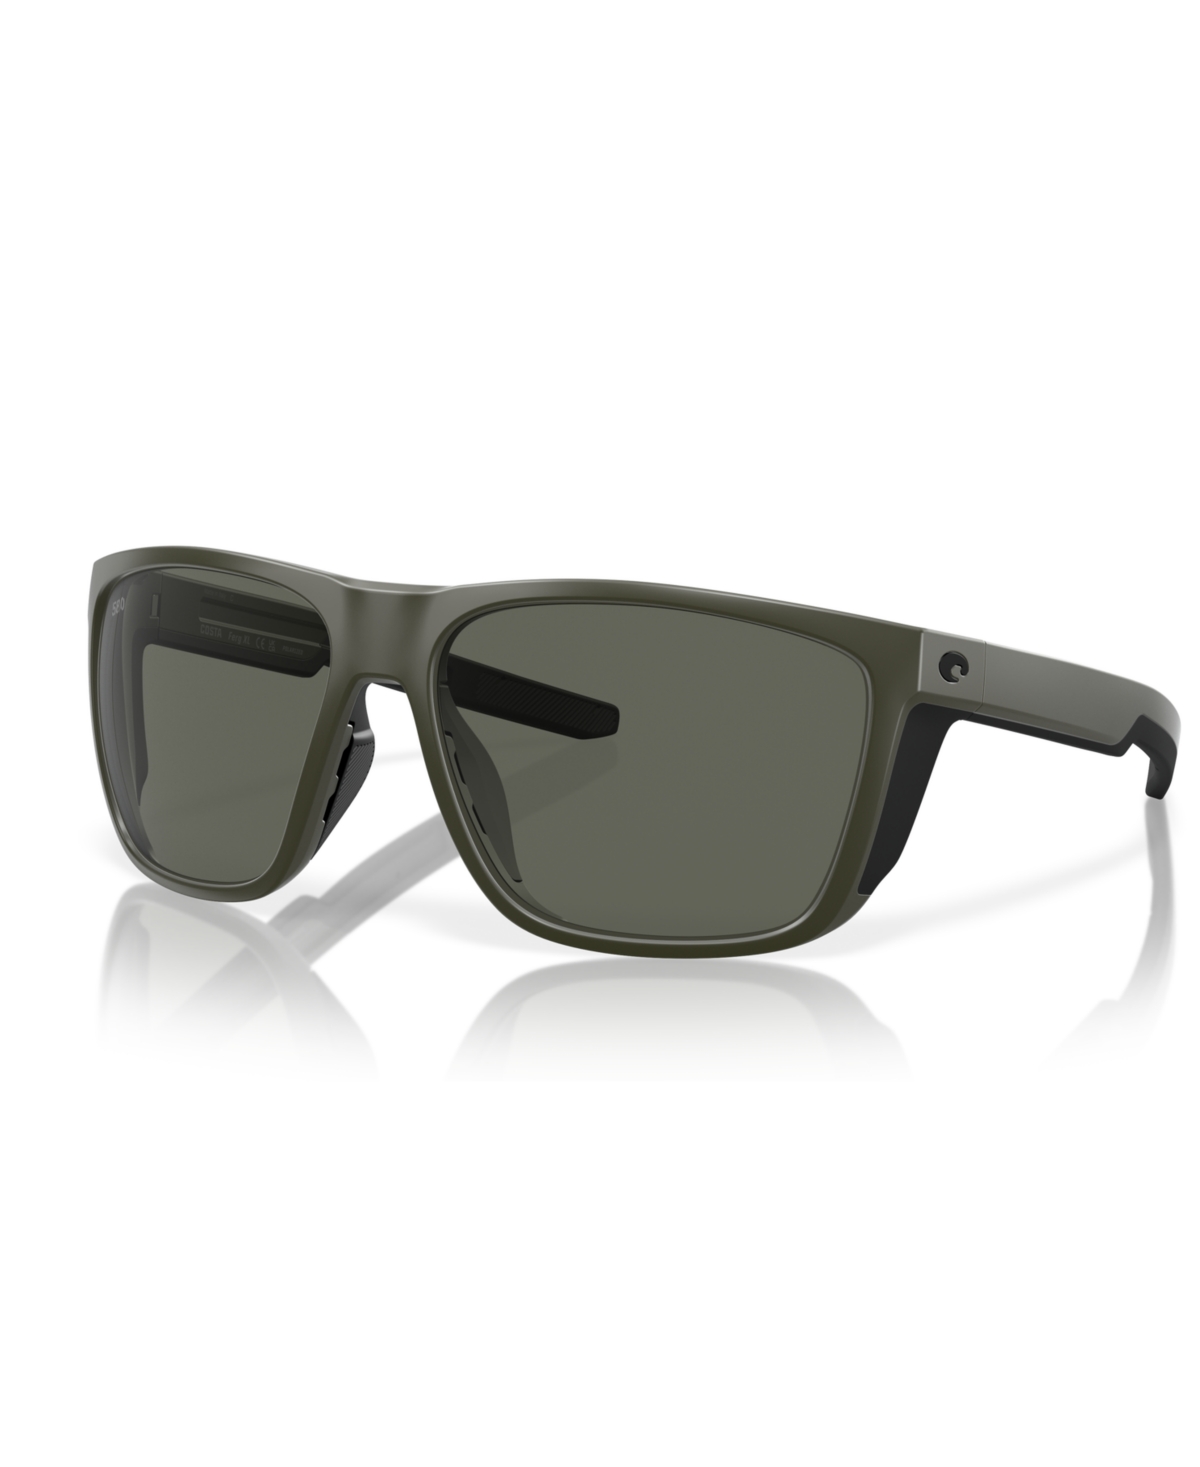 Men's Polarized Sunglasses, Ferg Xl 6S9012 - Matte Olive